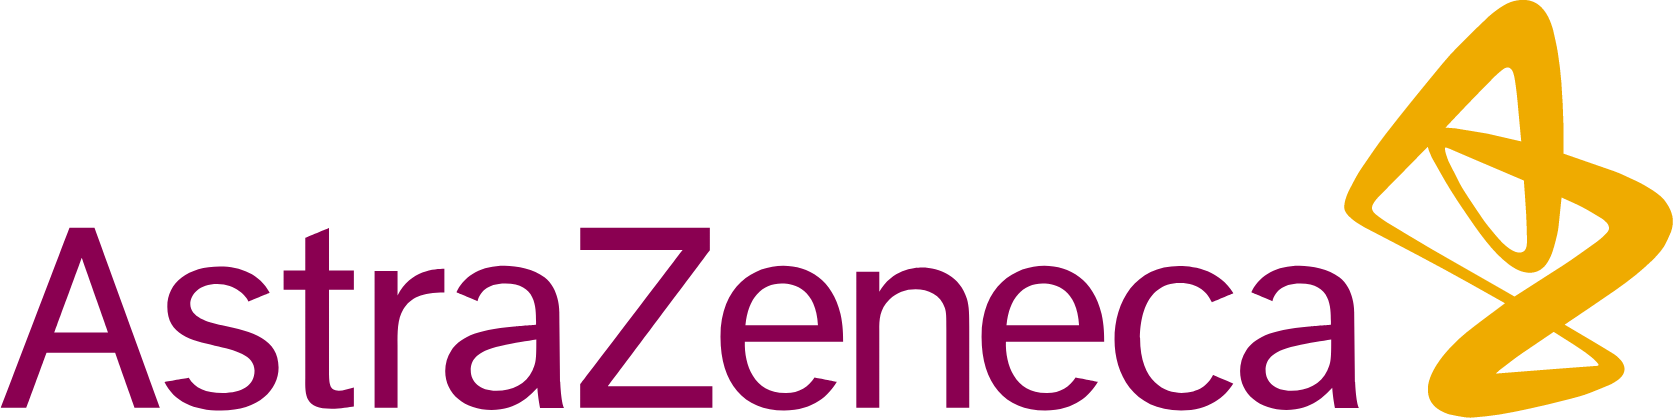 AstraZeneca logo large (transparent PNG)